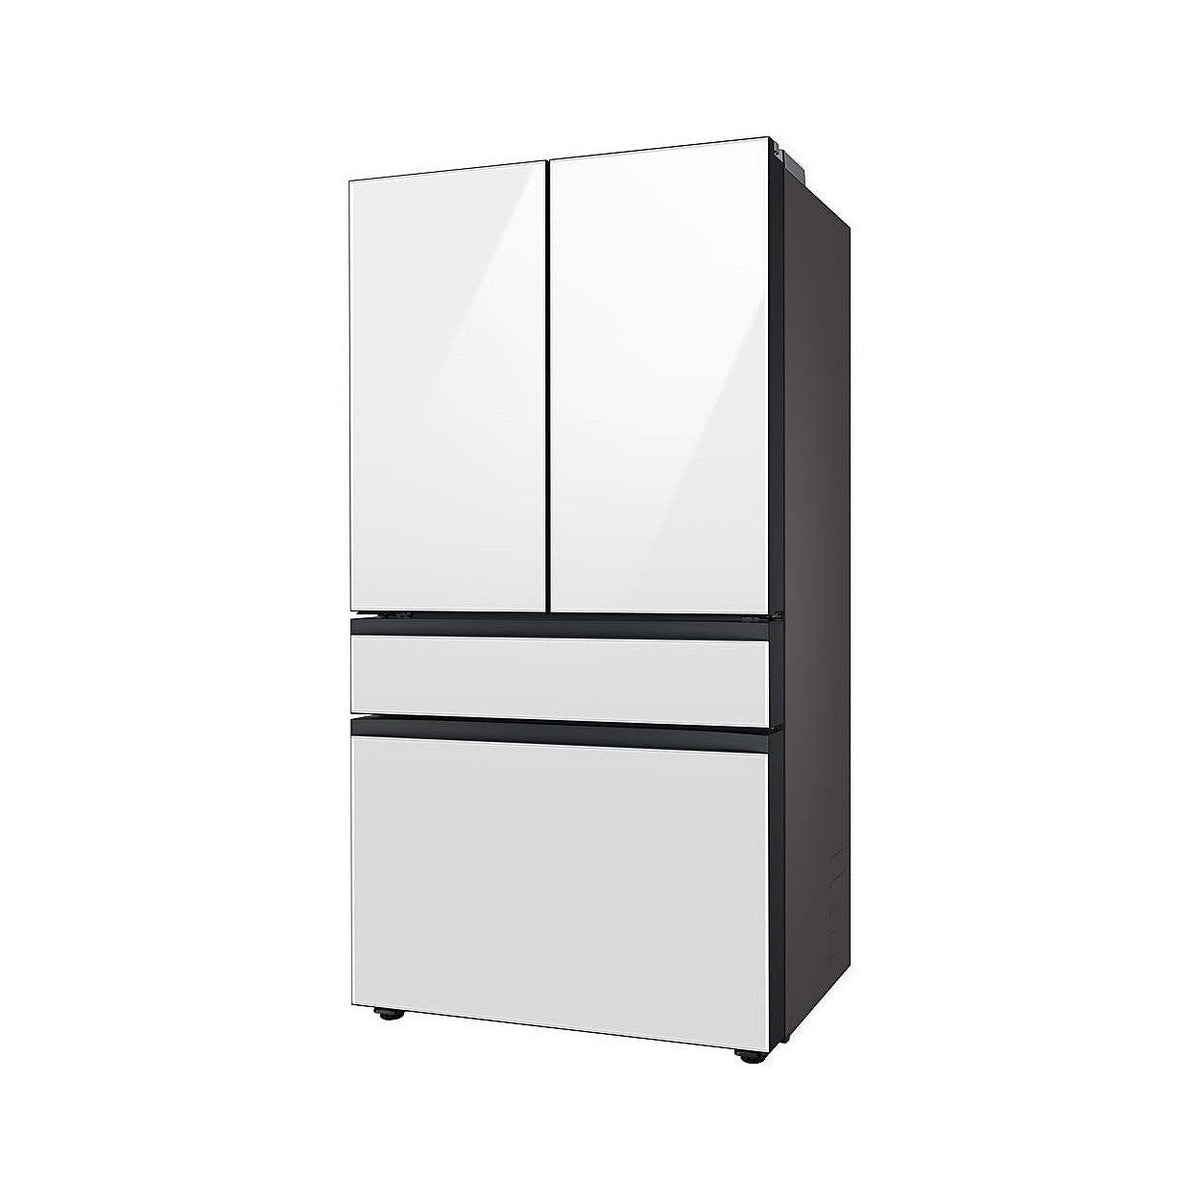 SAMSUNG Bespoke 4-Door French Door Refrigerator (23 cu. ft.) with Beverage Center™ in White Glass